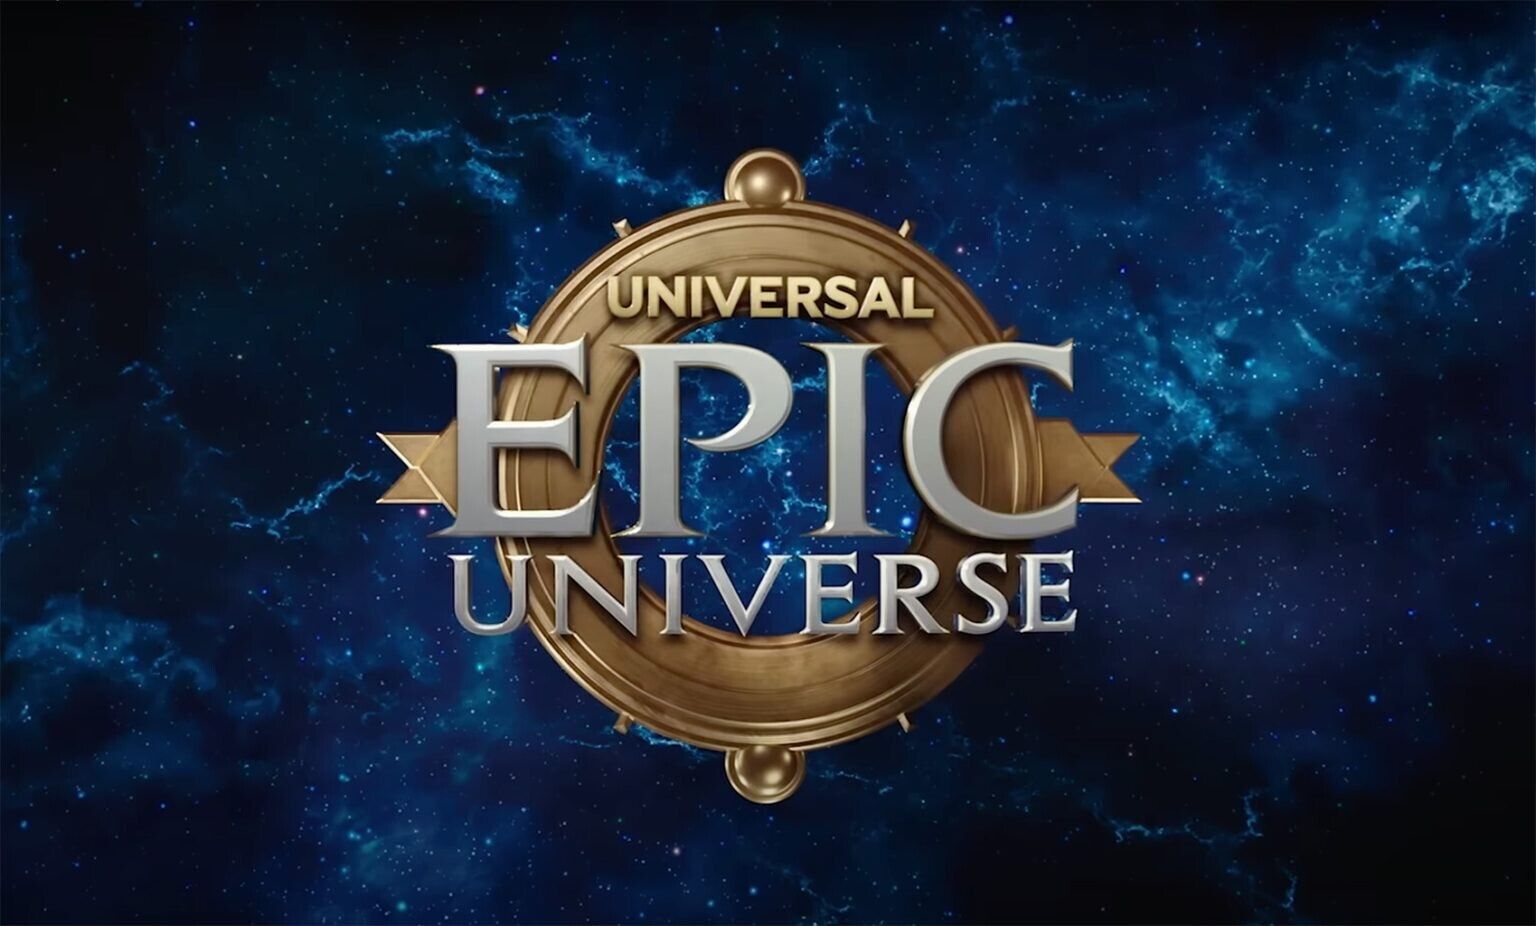 Universal Orlando EPIC Universe Logo Fridge Magnet 4\